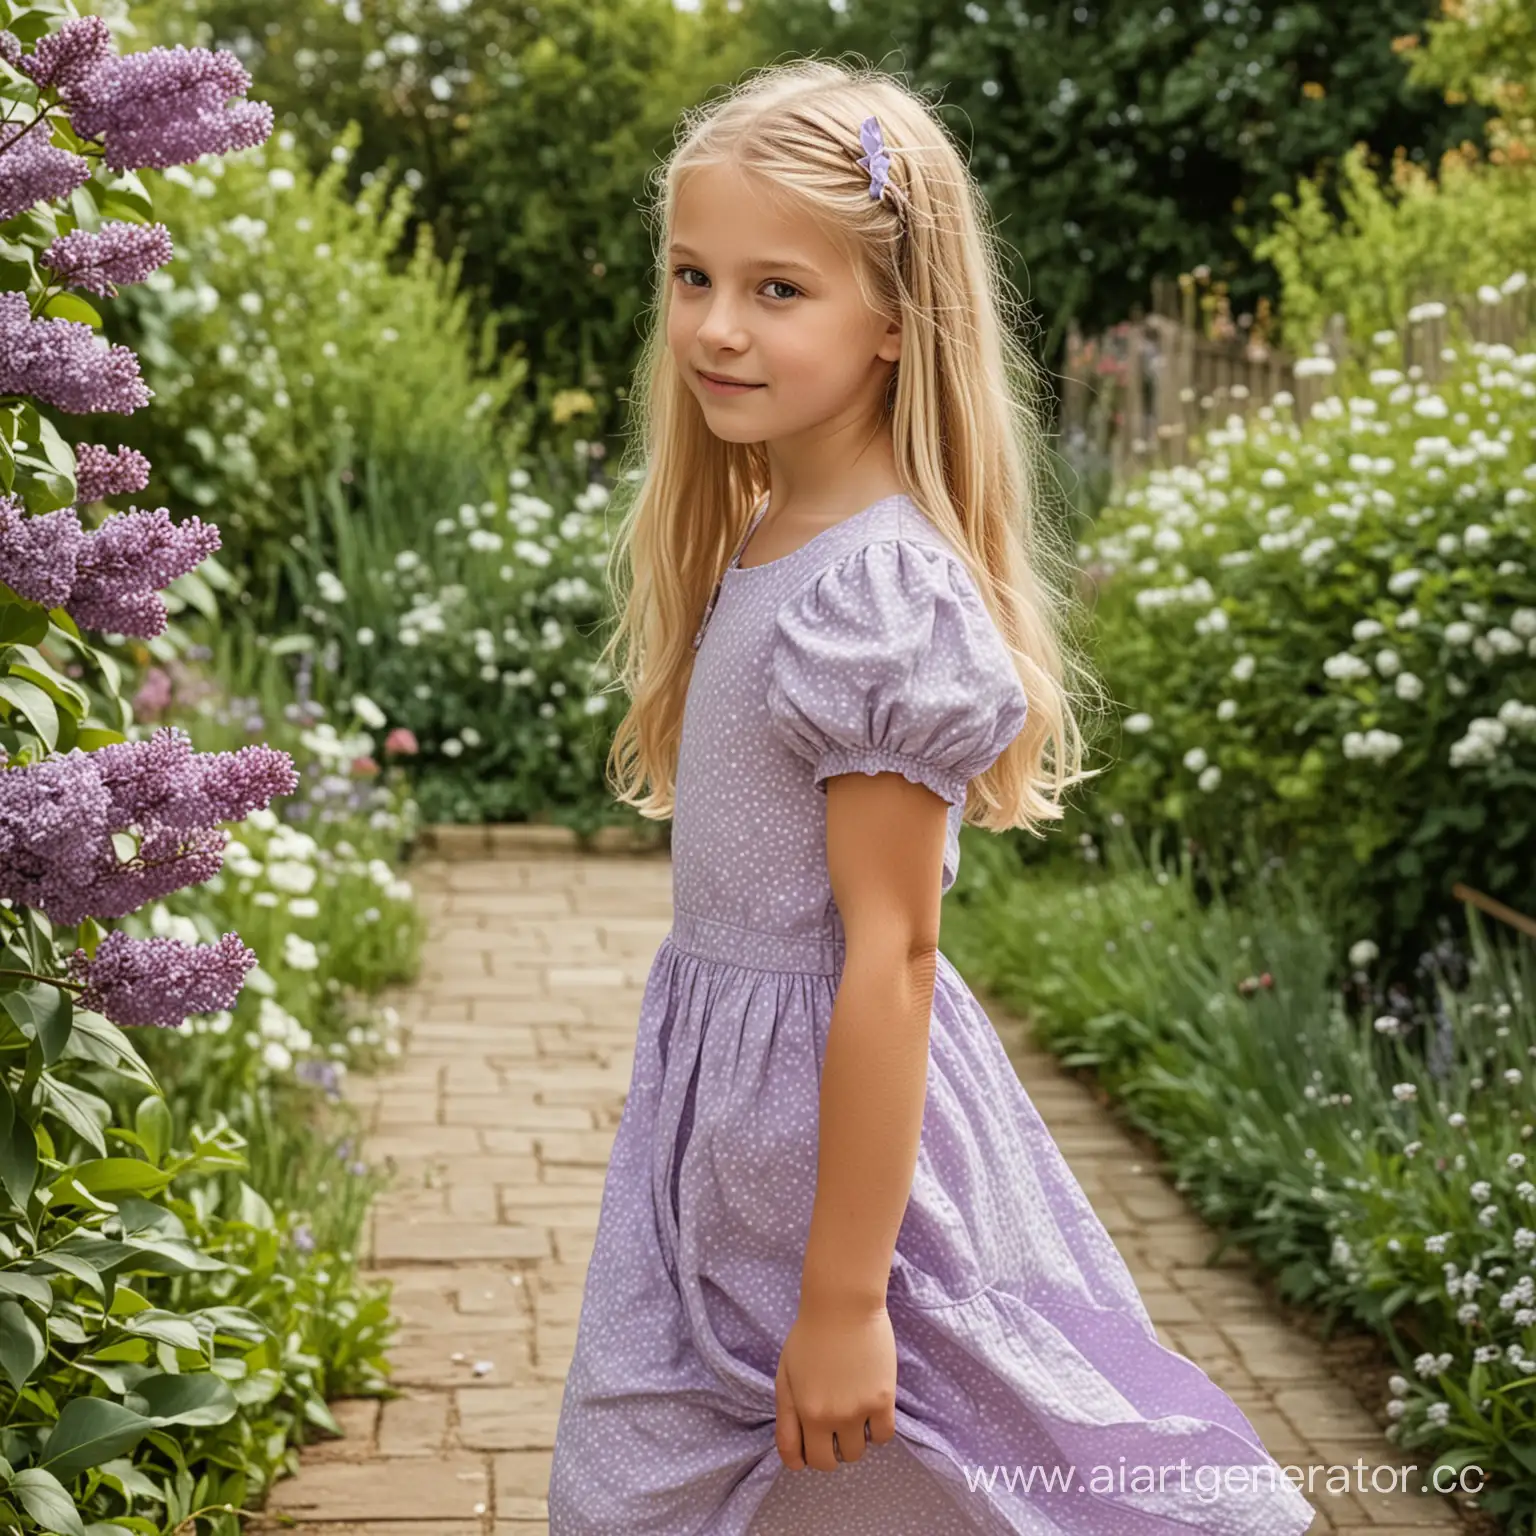 Girl-in-Lilac-Sundress-with-WaistLength-Blonde-Hair-in-Garden